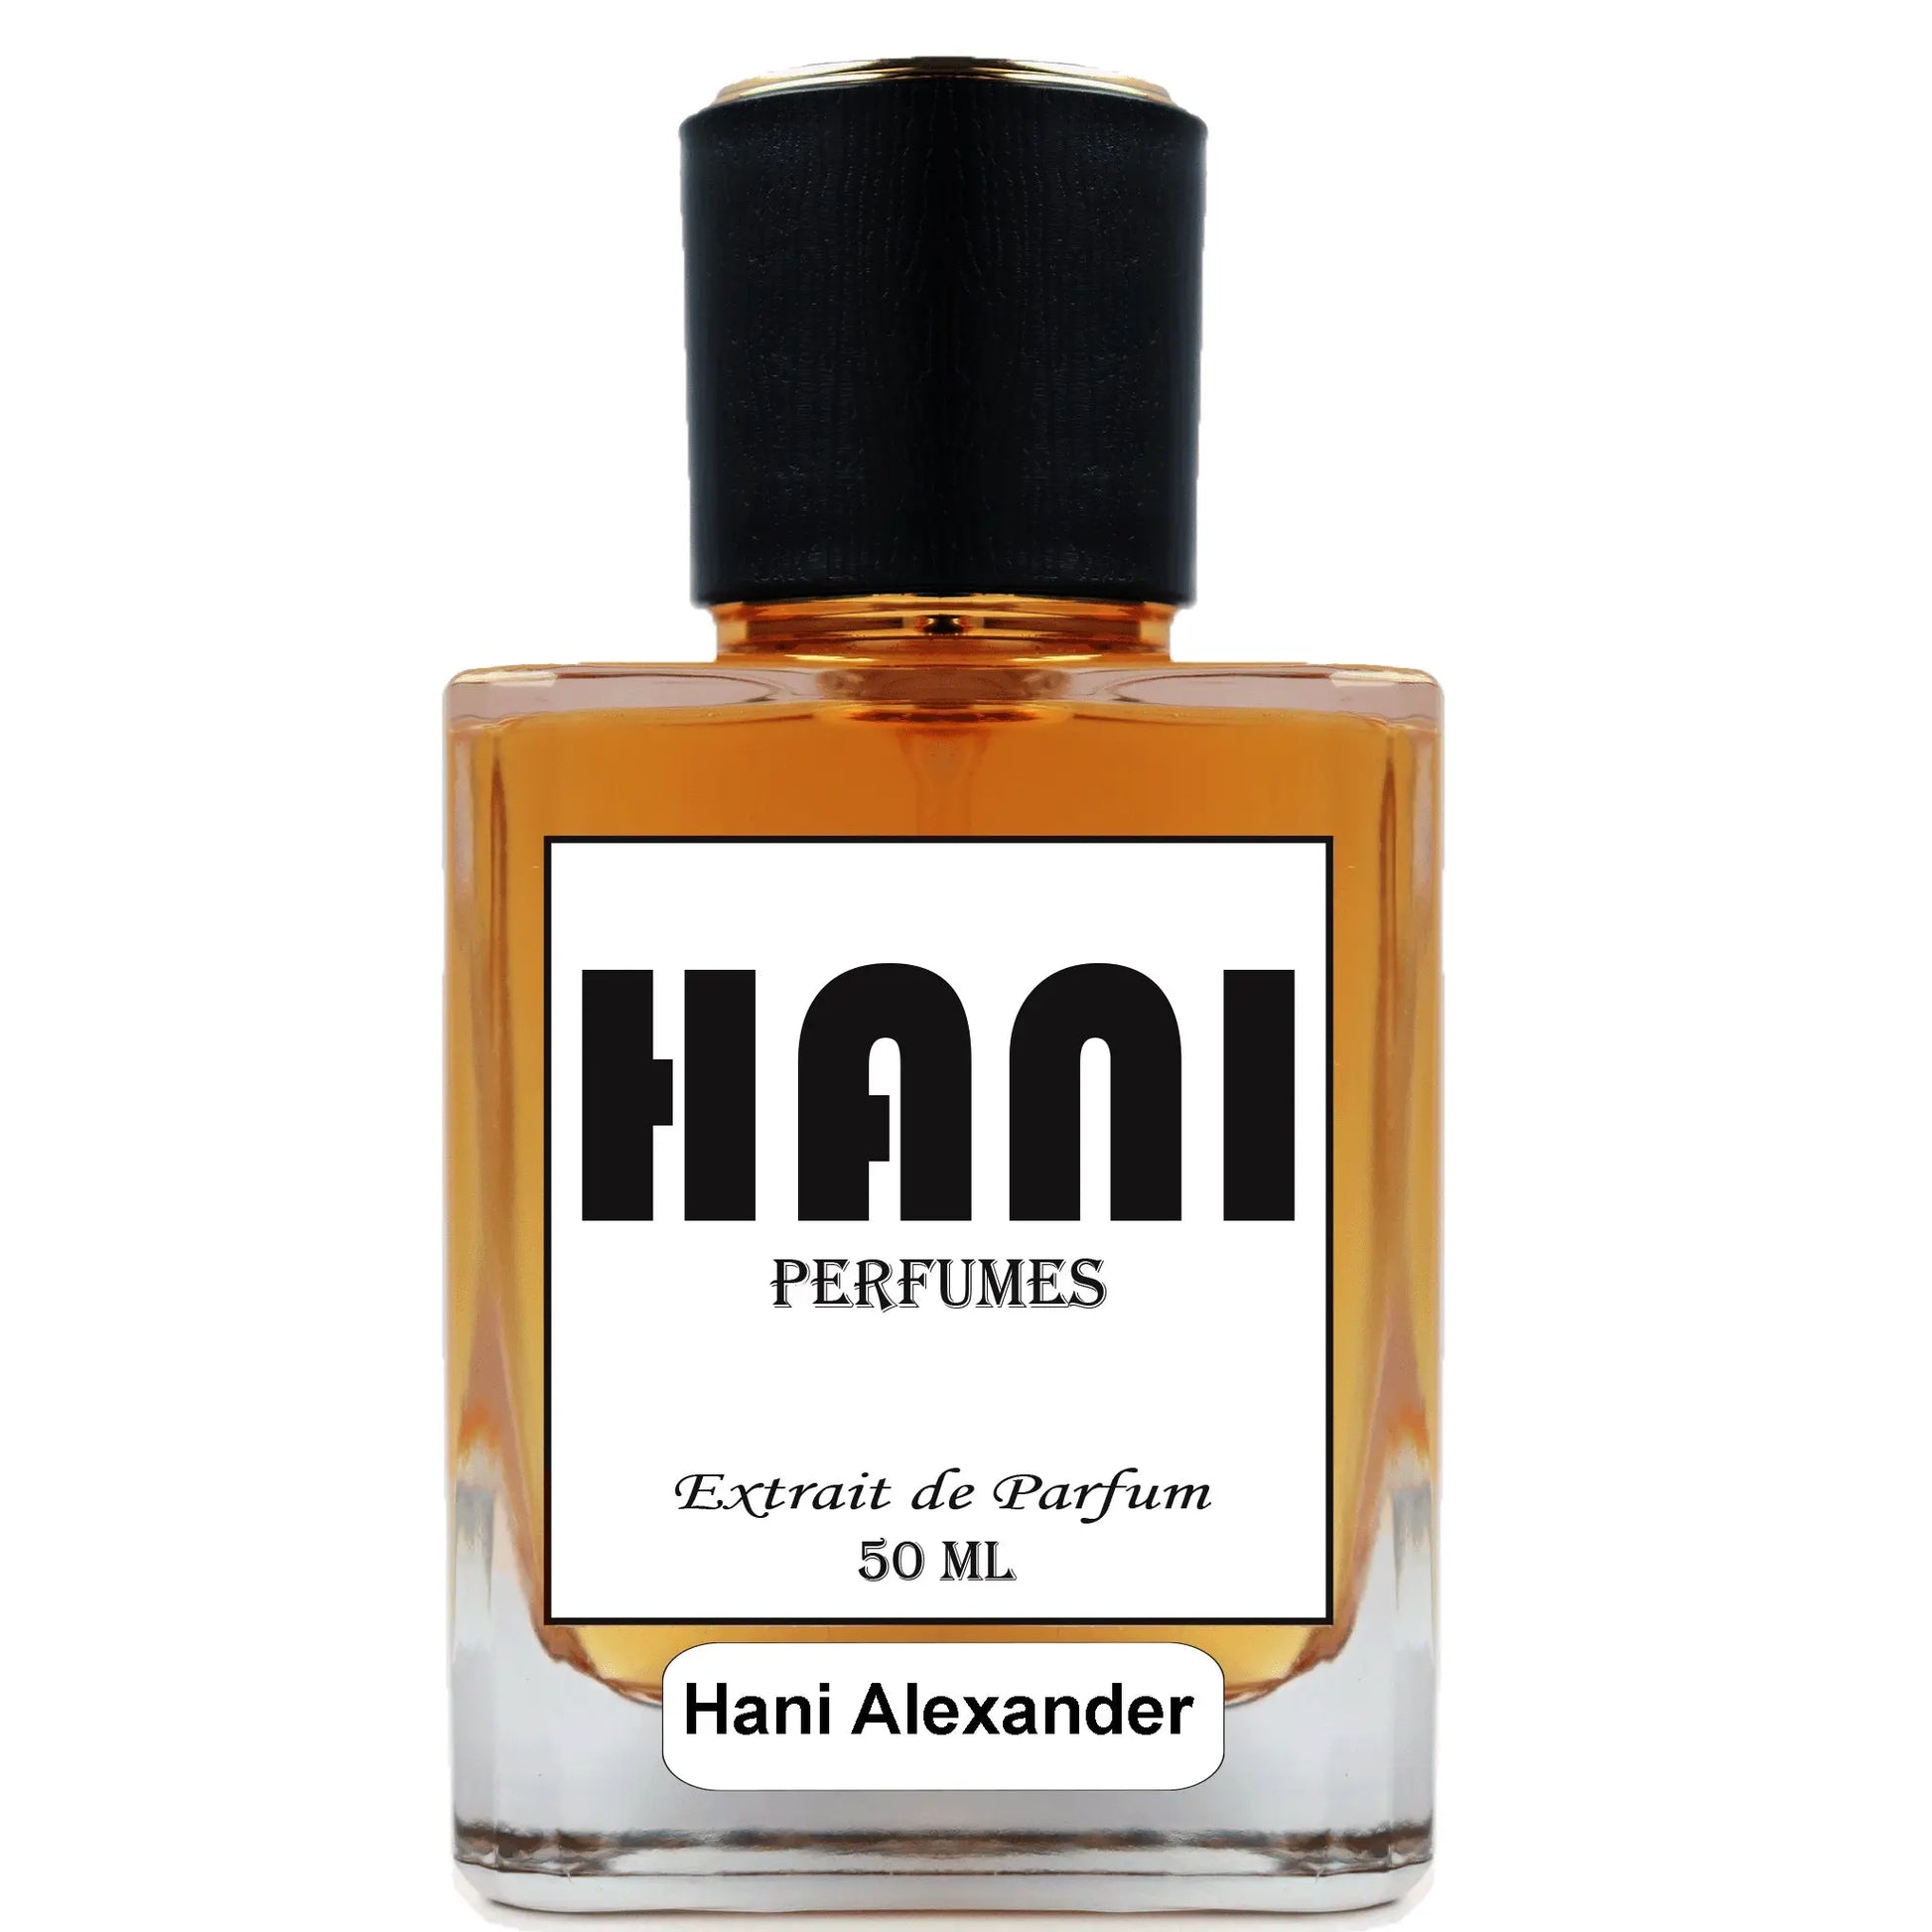 Hani Alexander Unisex Parfum duftzwillinge parfum dupe duftzwilling